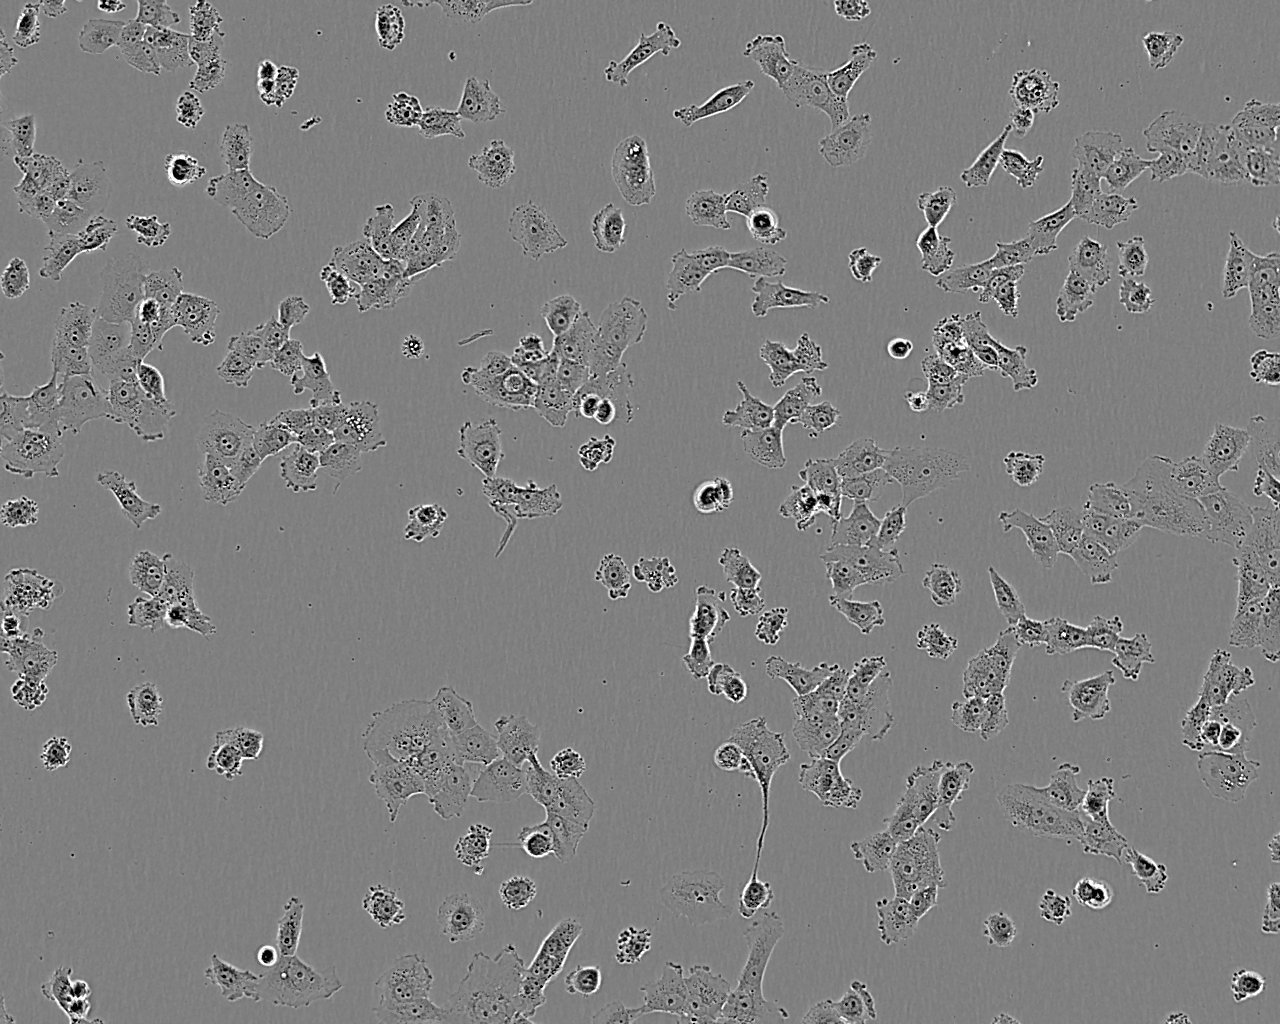 BpRc1 epithelioid cells小鼠肝癌细胞系,BpRc1 epithelioid cells